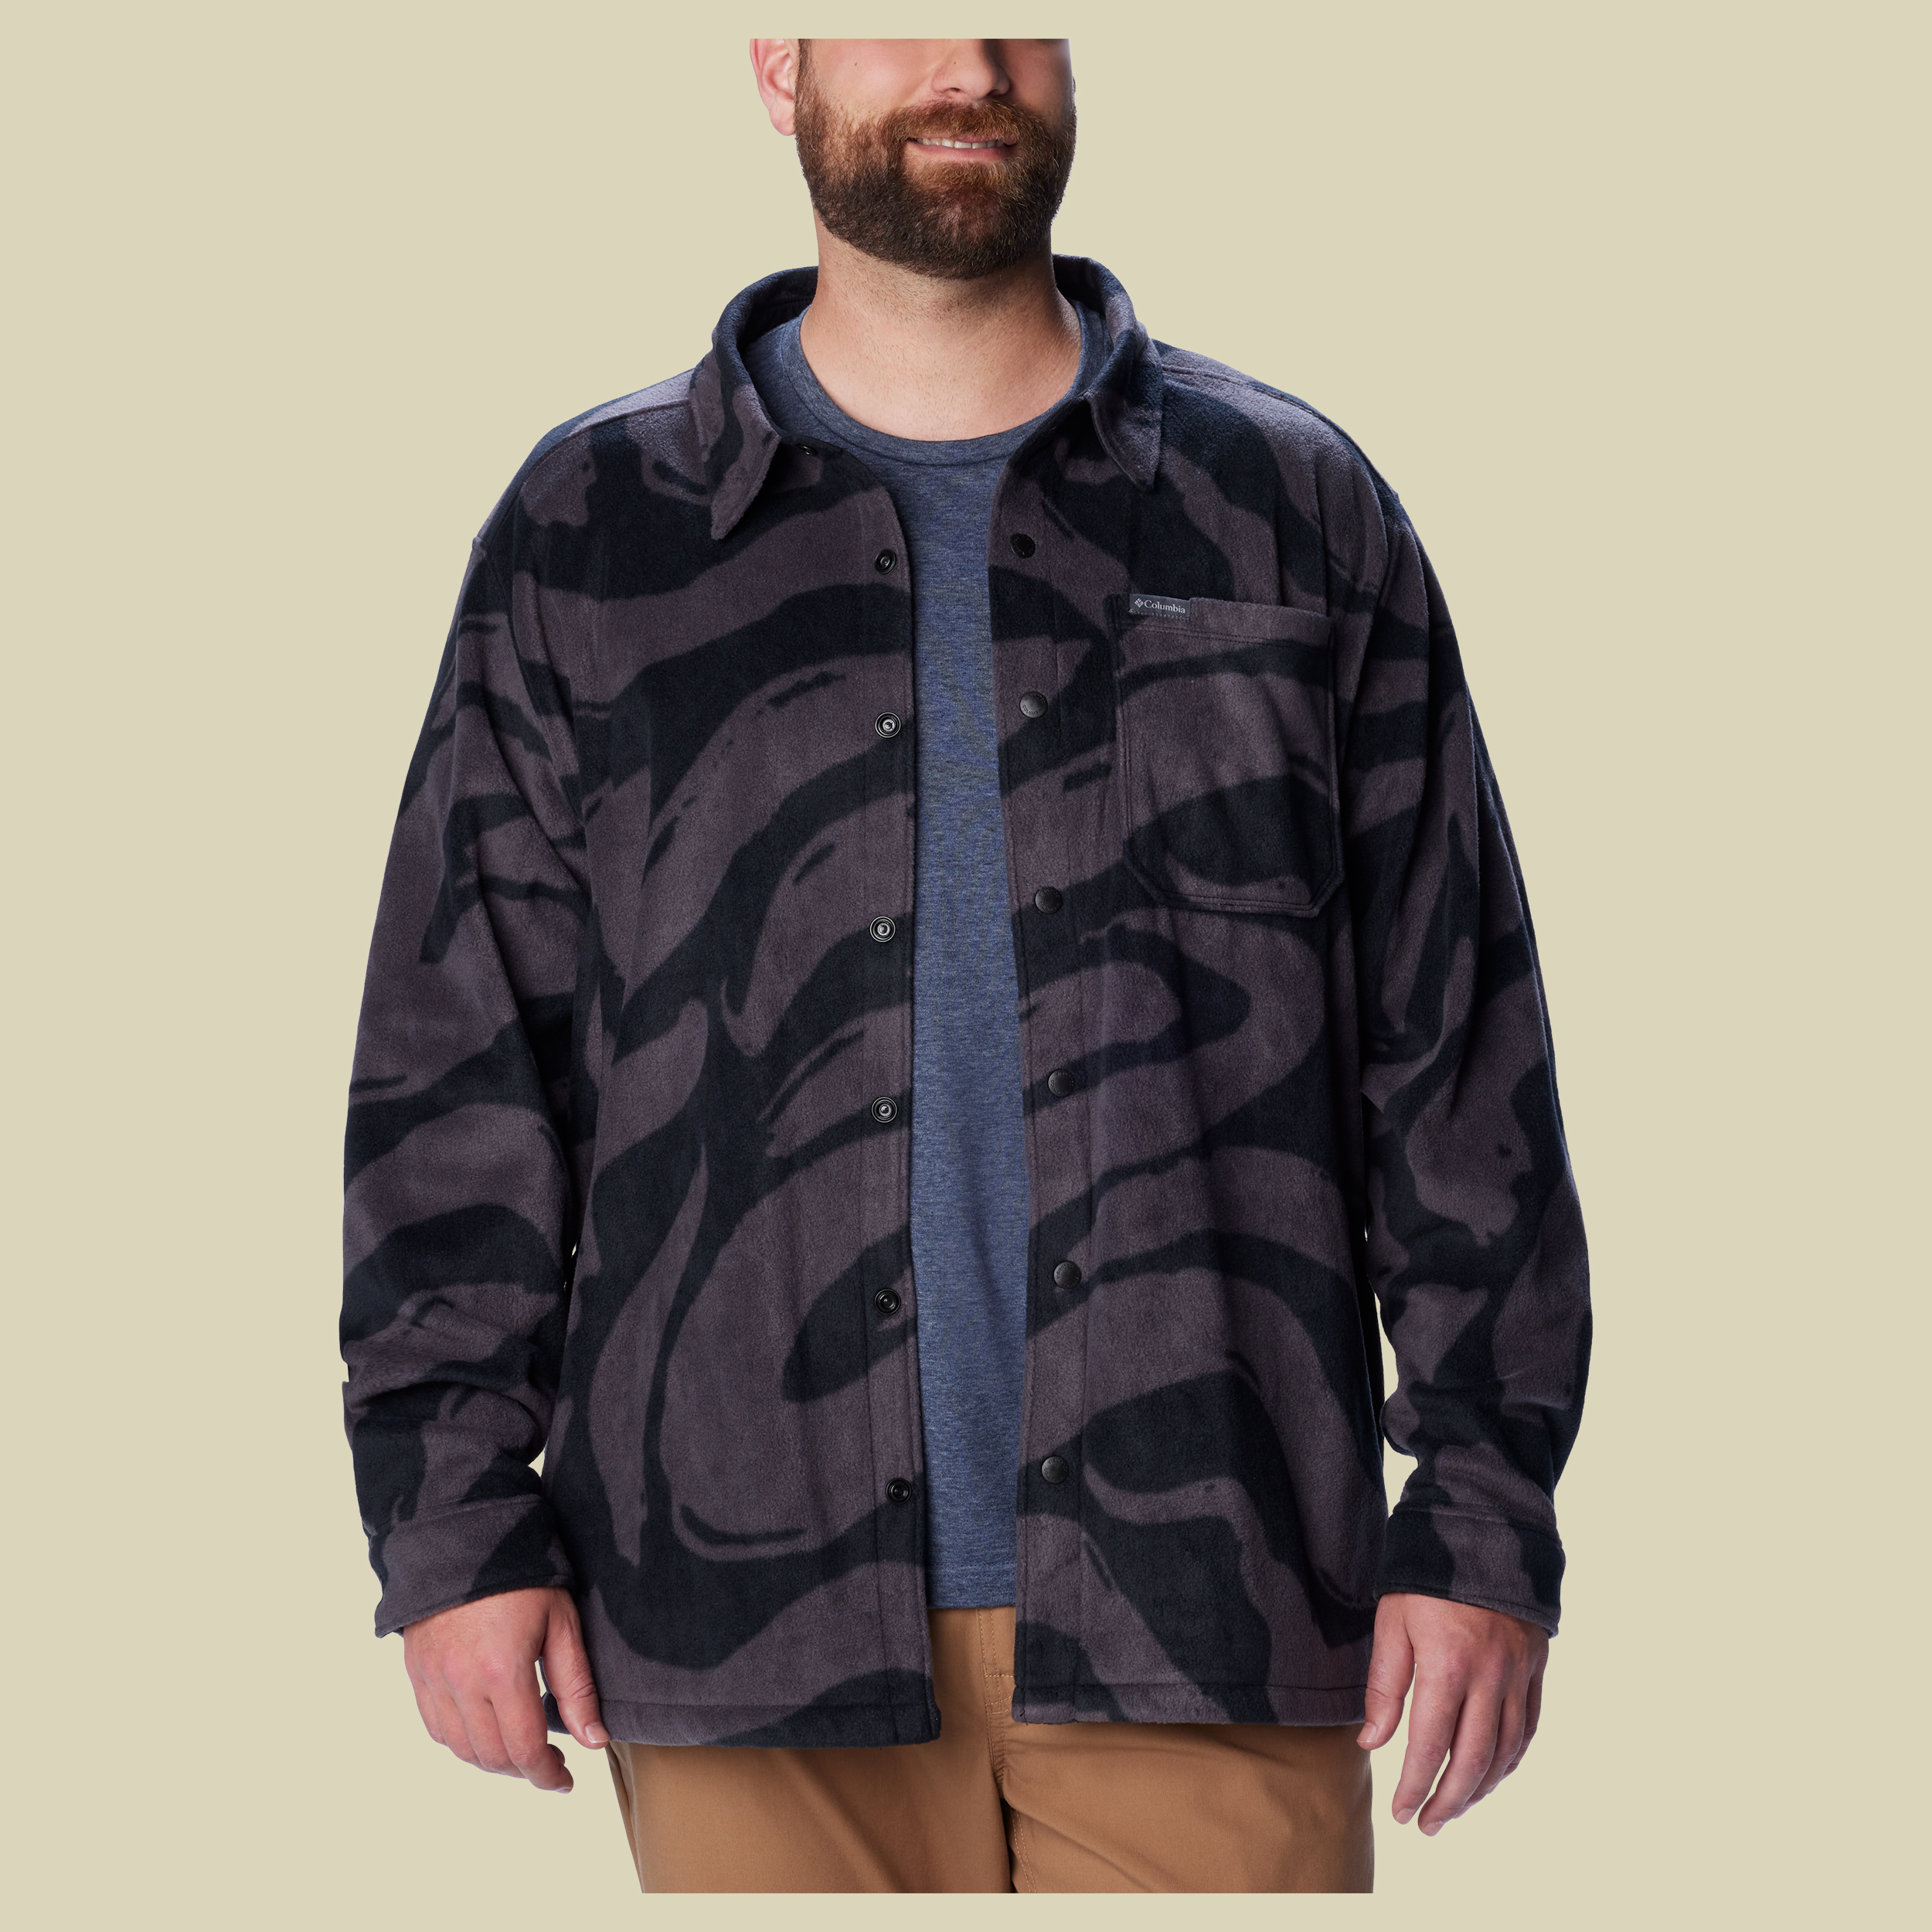 Steens Mountain Printed Jacket Men Größe L  Farbe black snowdrift